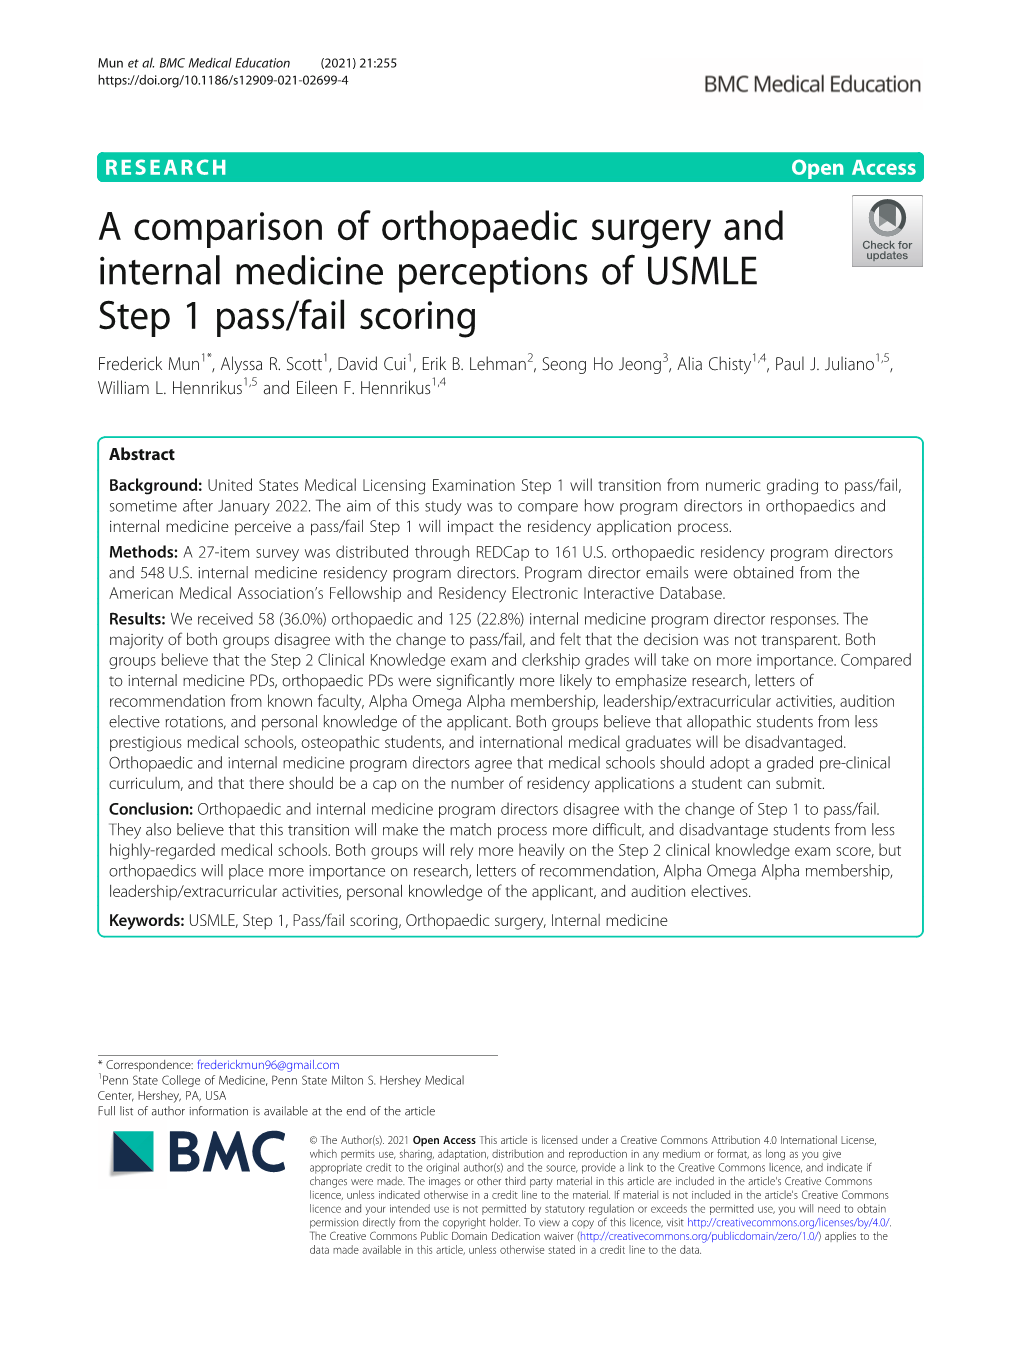 A Comparison of Orthopaedic Surgery and Internal Medicine Perceptions of USMLE Step 1 Pass/Fail Scoring Frederick Mun1*, Alyssa R